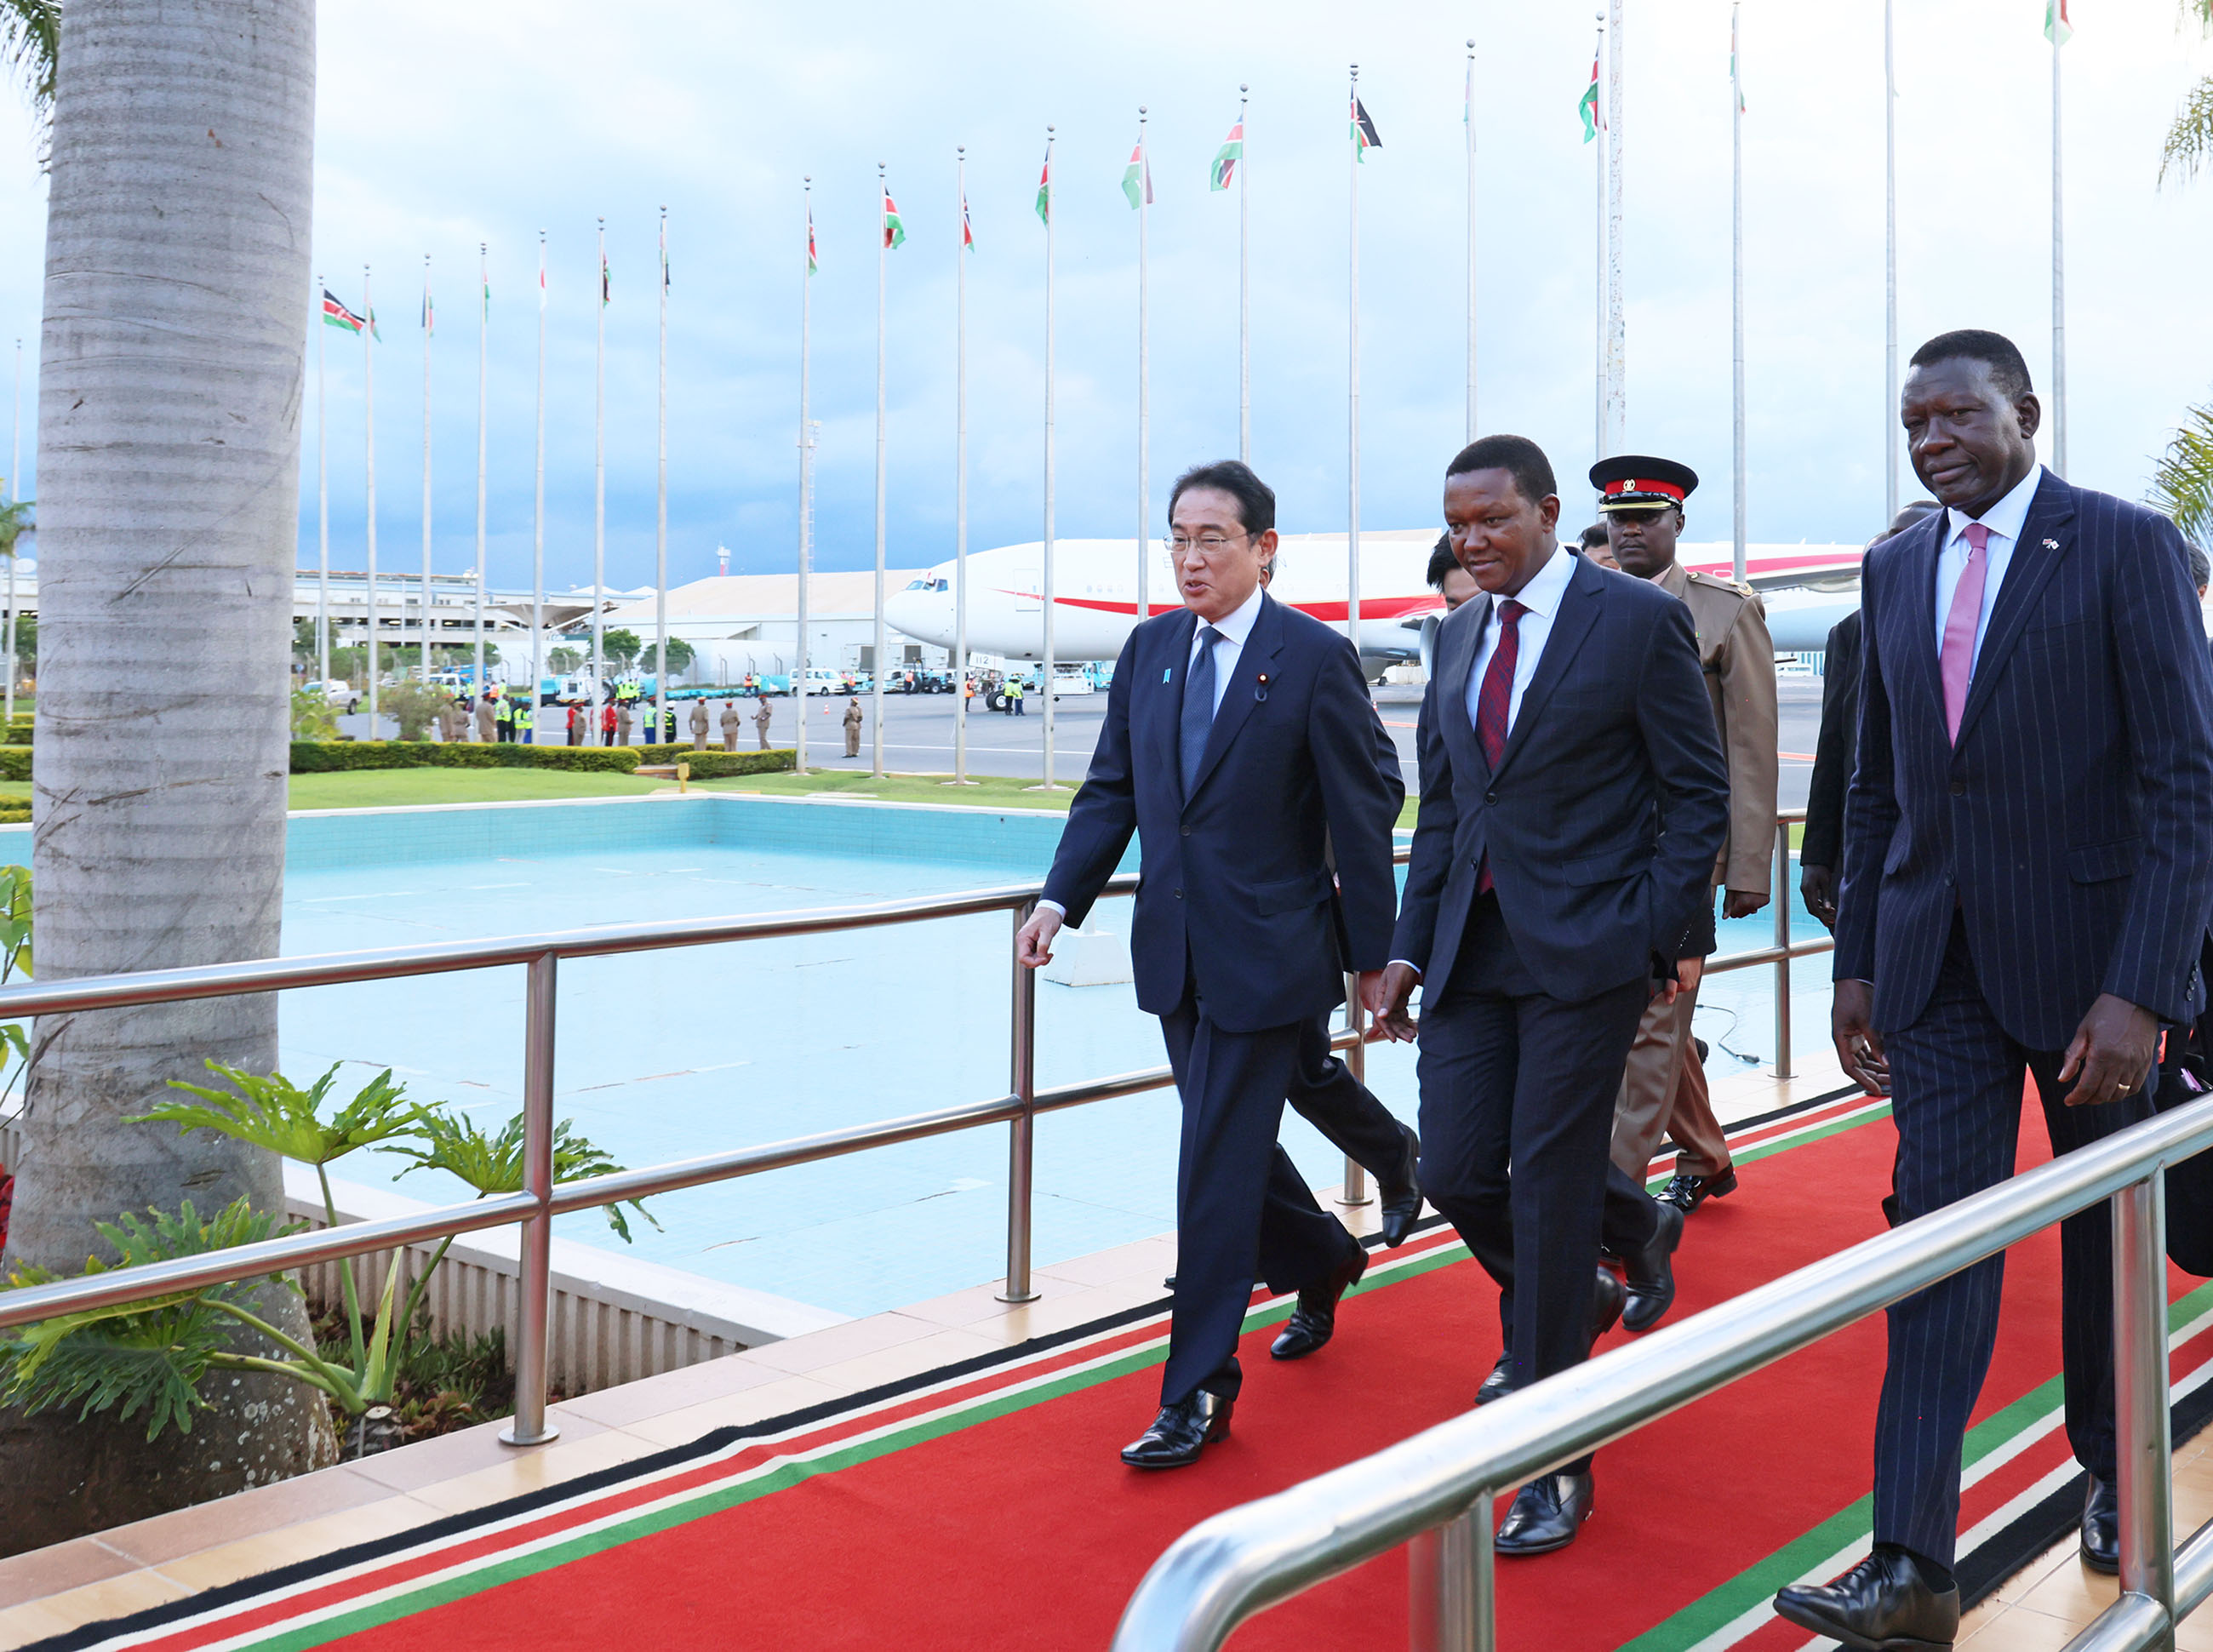 Prime Minister Kishida arriving in Kenya (3)